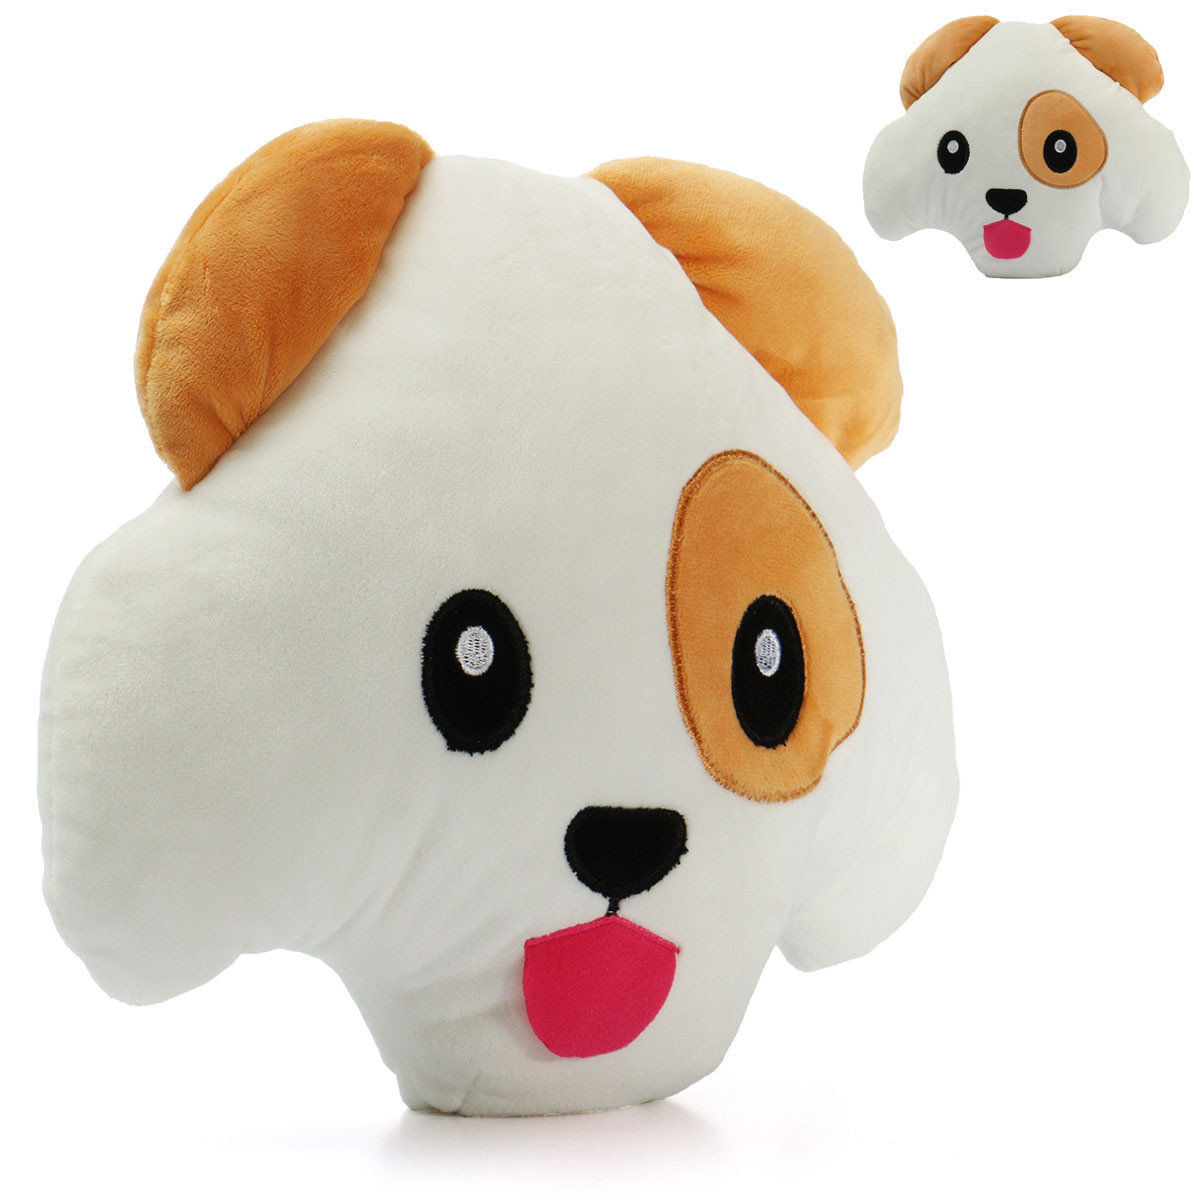 12 "Cute Puffy Dog Soft Kussen Emoticon Speelgoed Grappige Gevulde Kussen Doll Gifts